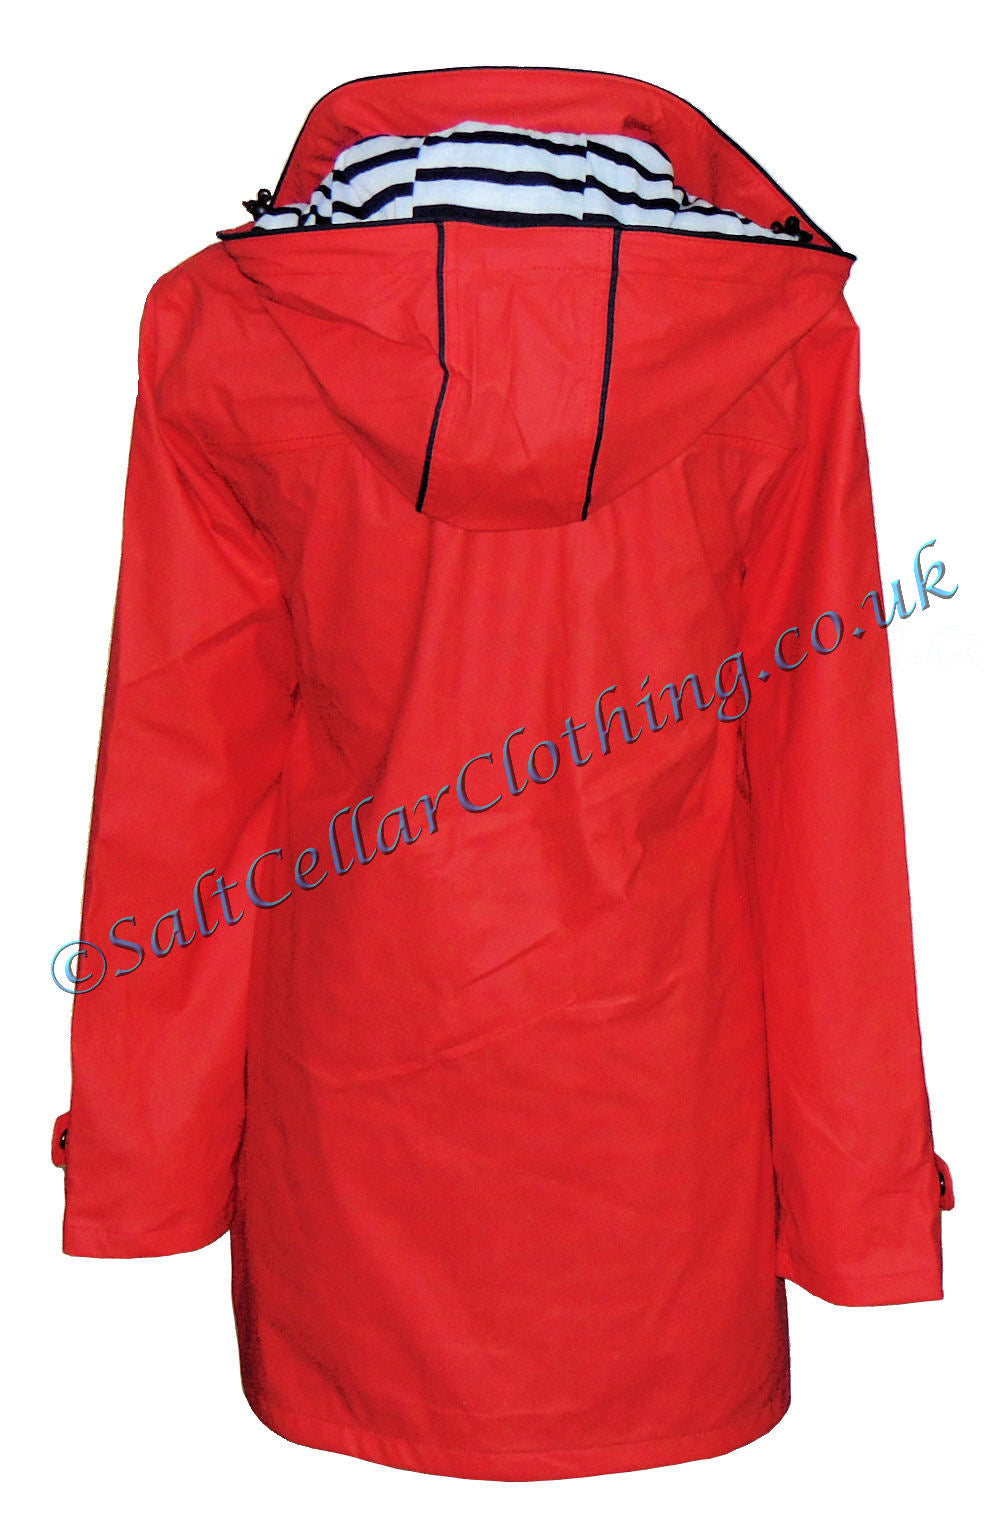 Captain Corsaire women's nautical style Regate Ete waterproof rain coat in Capucine Red / Orange.